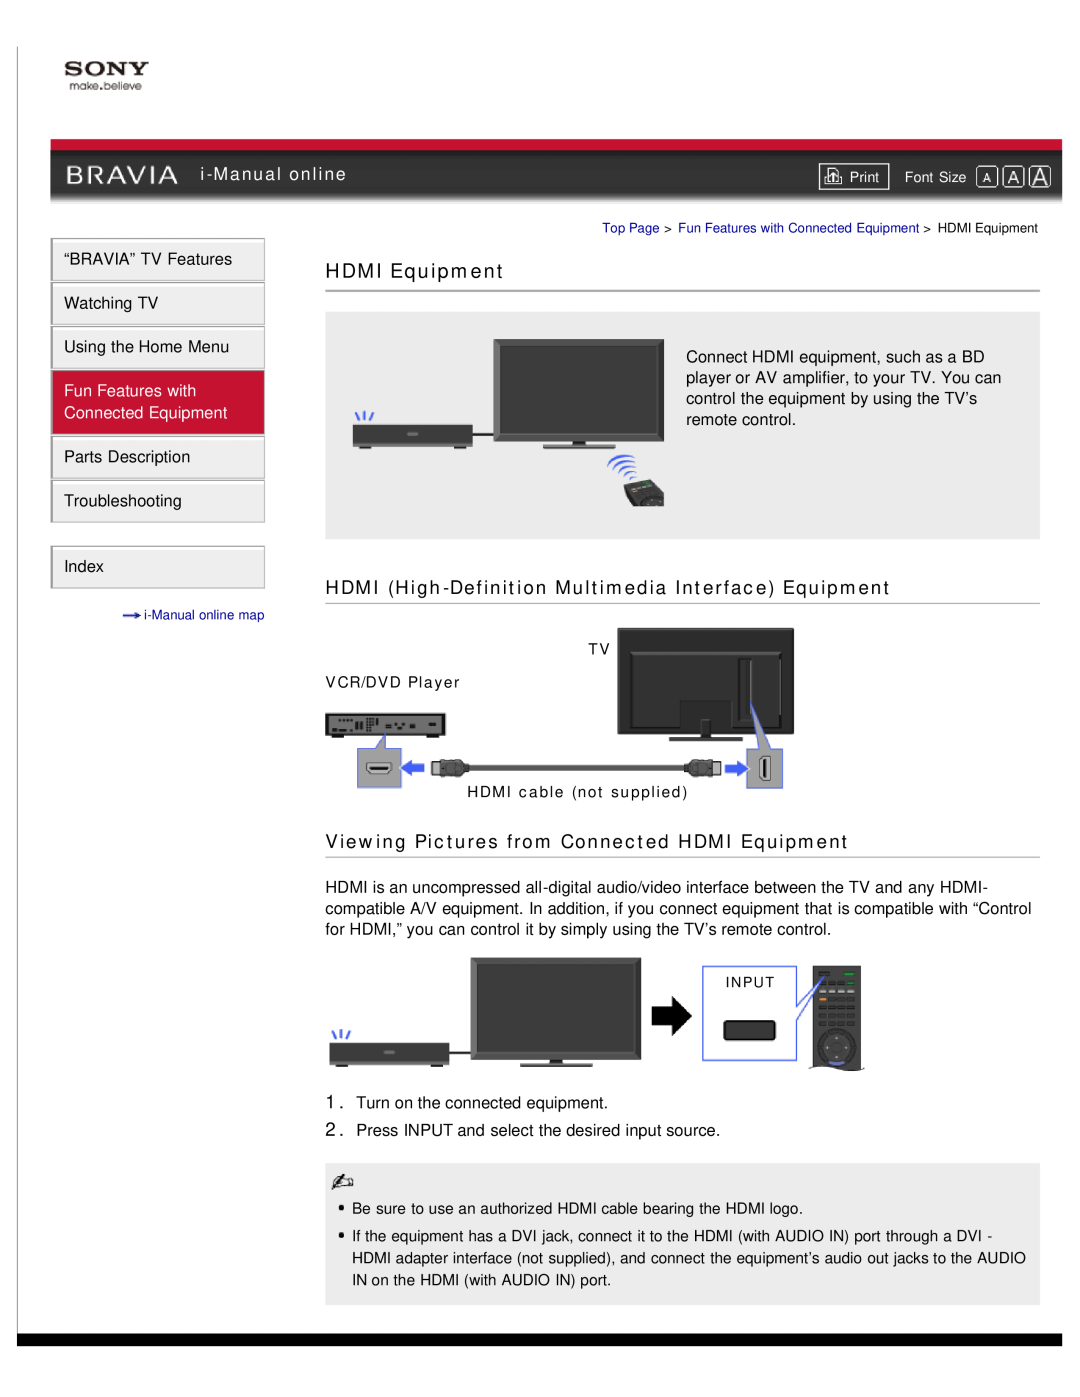 Sony NX80X manual HDMI Equipment, HDMI High-Definition Multimedia Interface Equipment, i-Manual online, TV VCR/DVD Player 